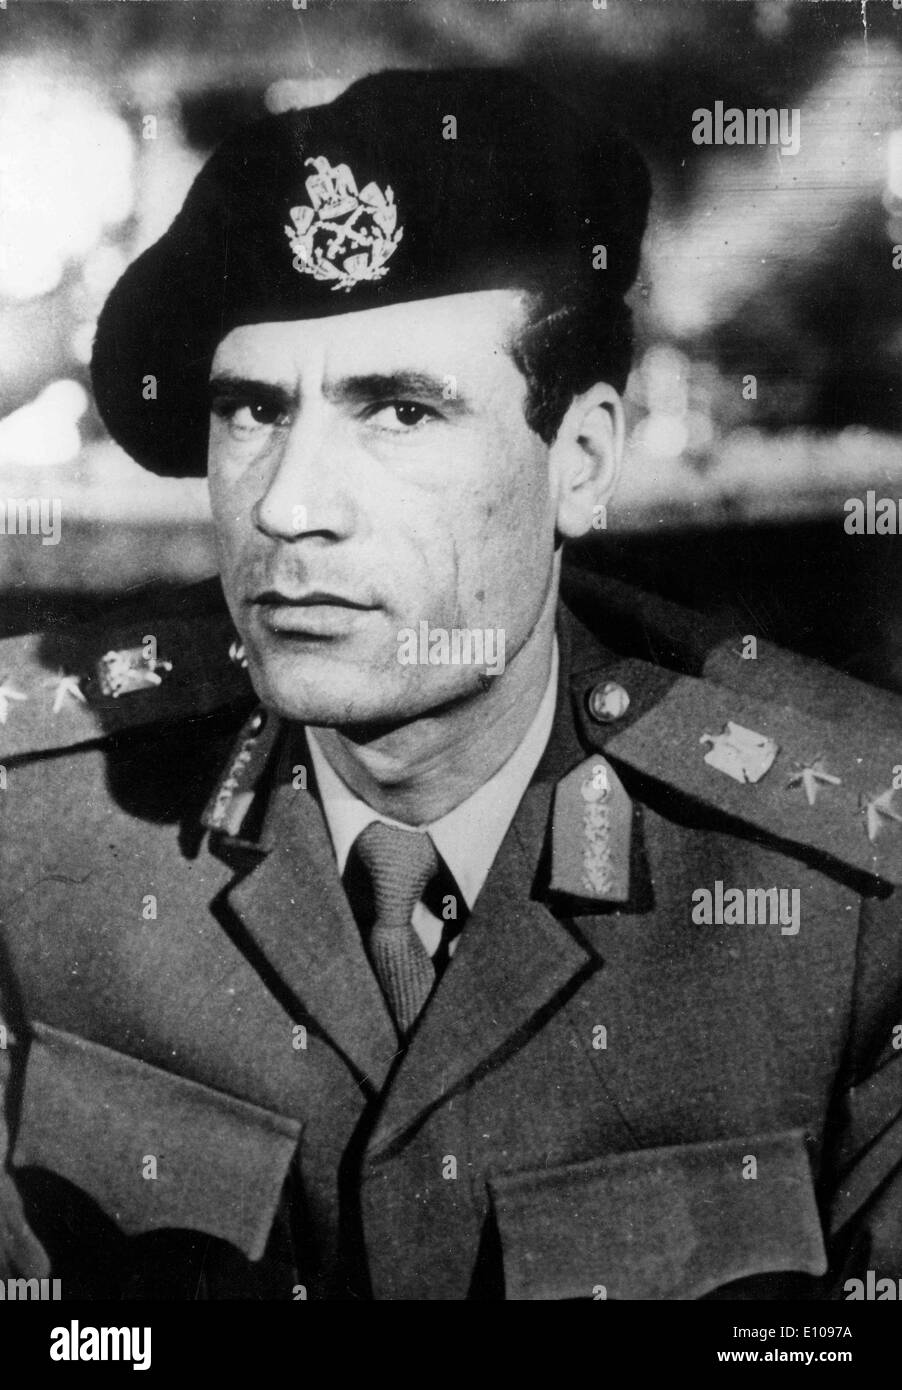 Muammar Al Gaddafi High Resolution Stock Photography and Images - Alamy